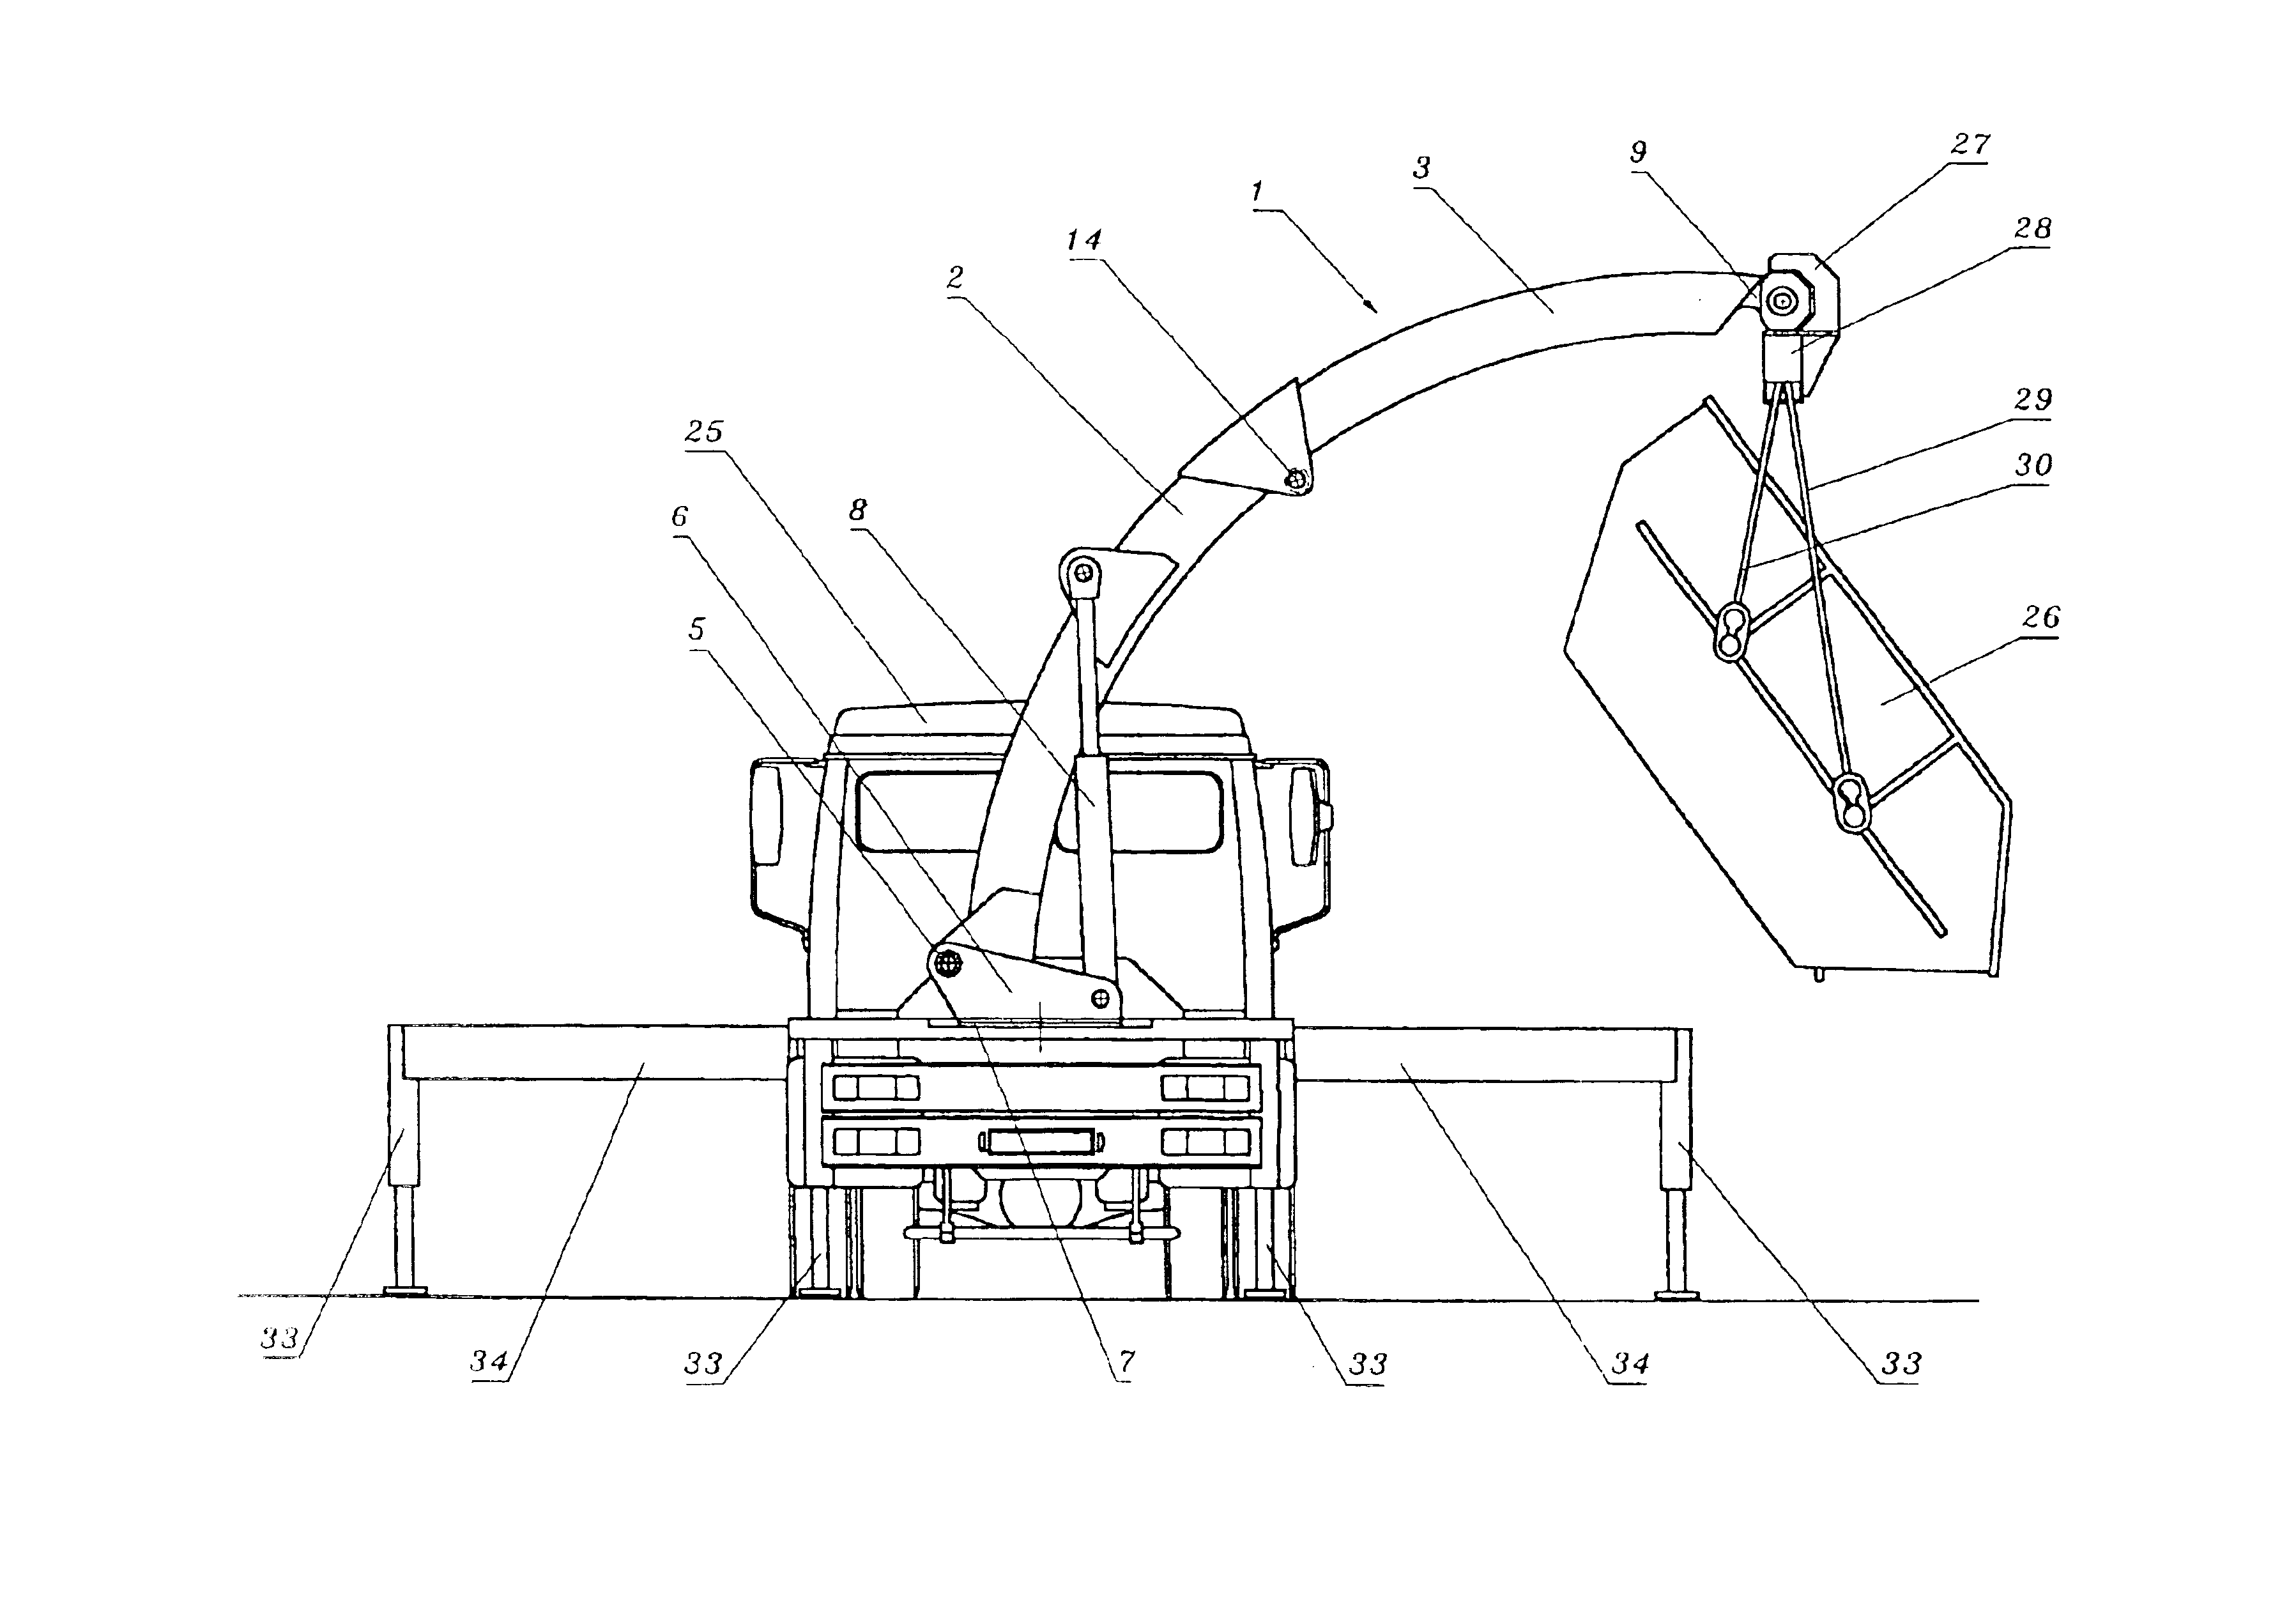 Telescopic jib for a motor vehicle or a crane